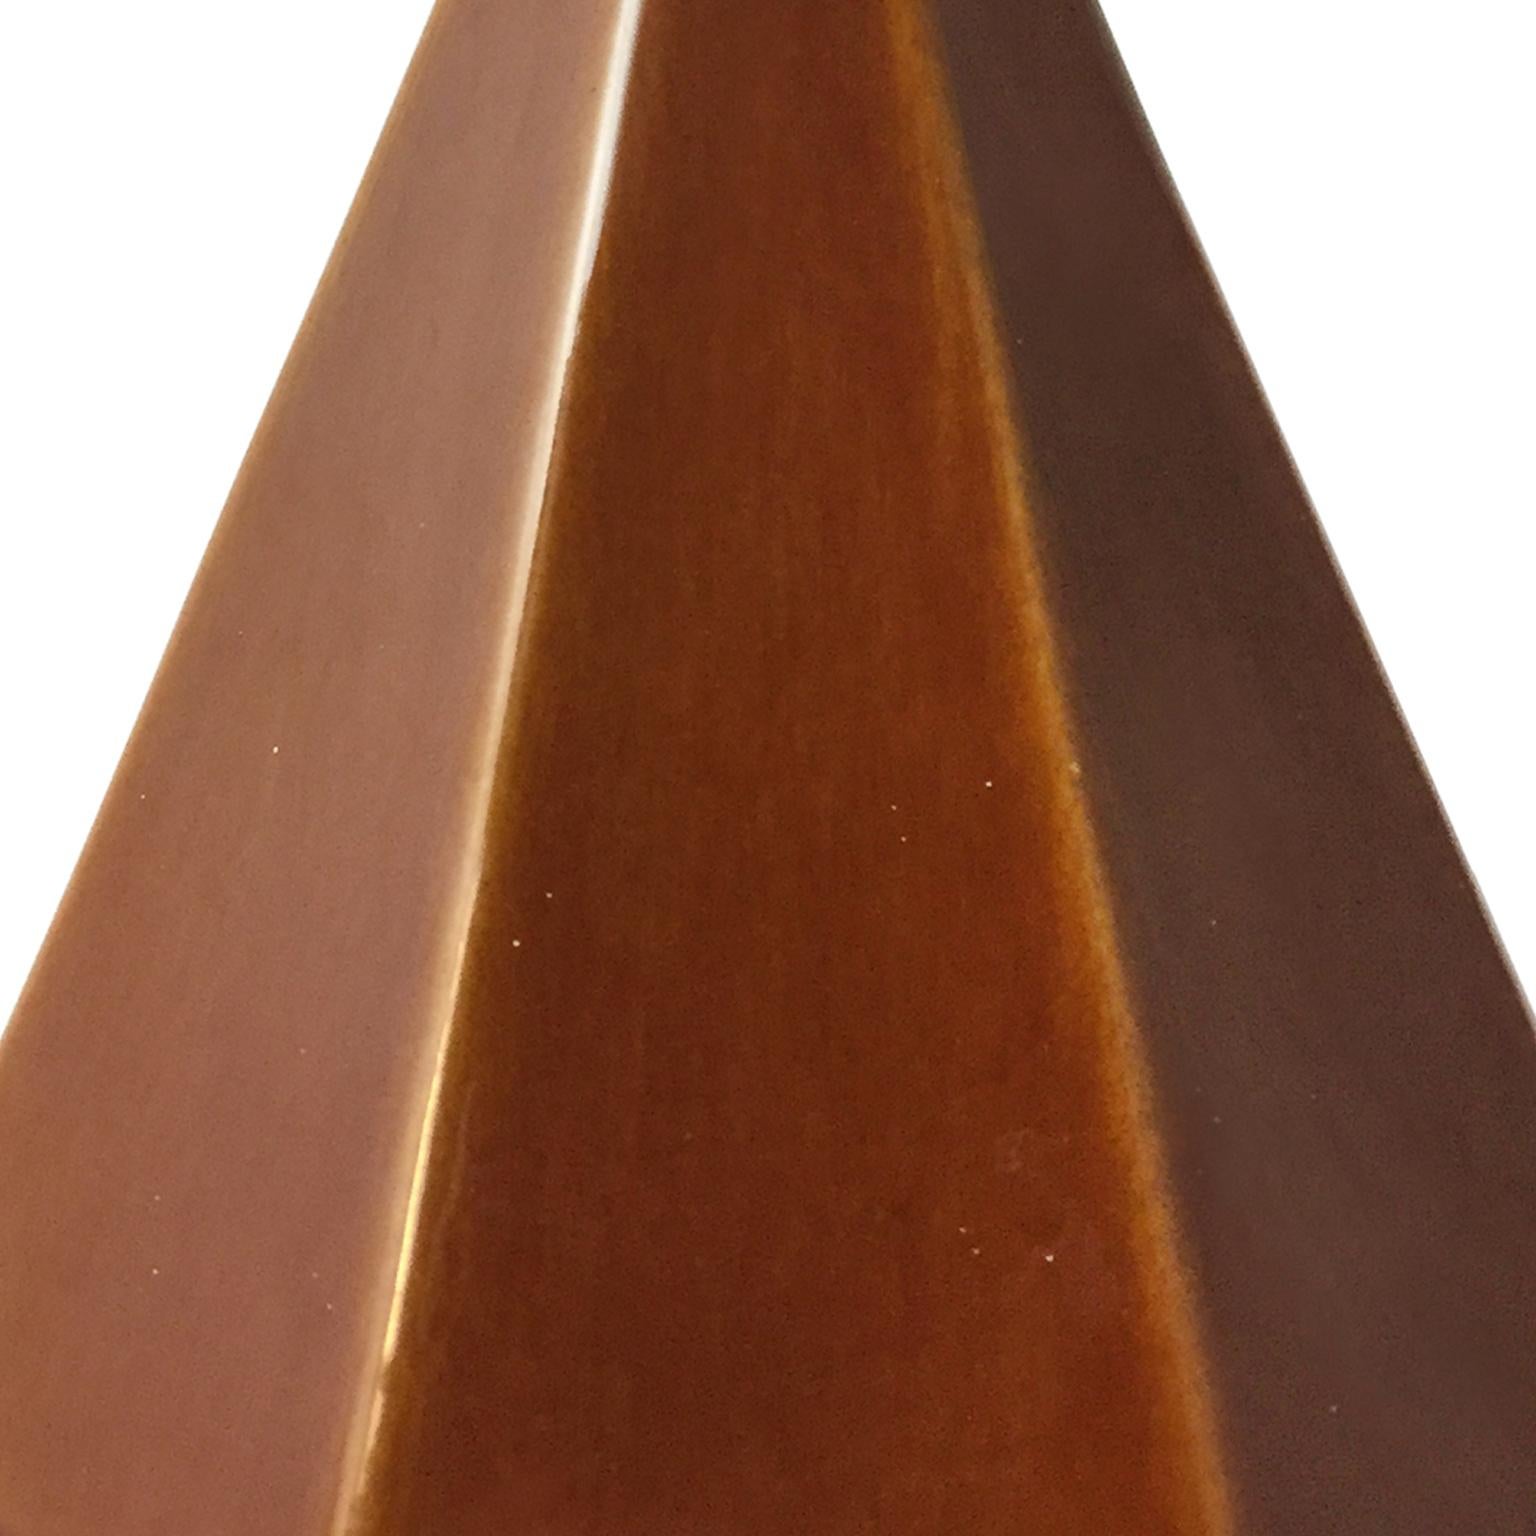 American 1960s Modernist Ceramic Pyramid with Auburn Glaze For Sale